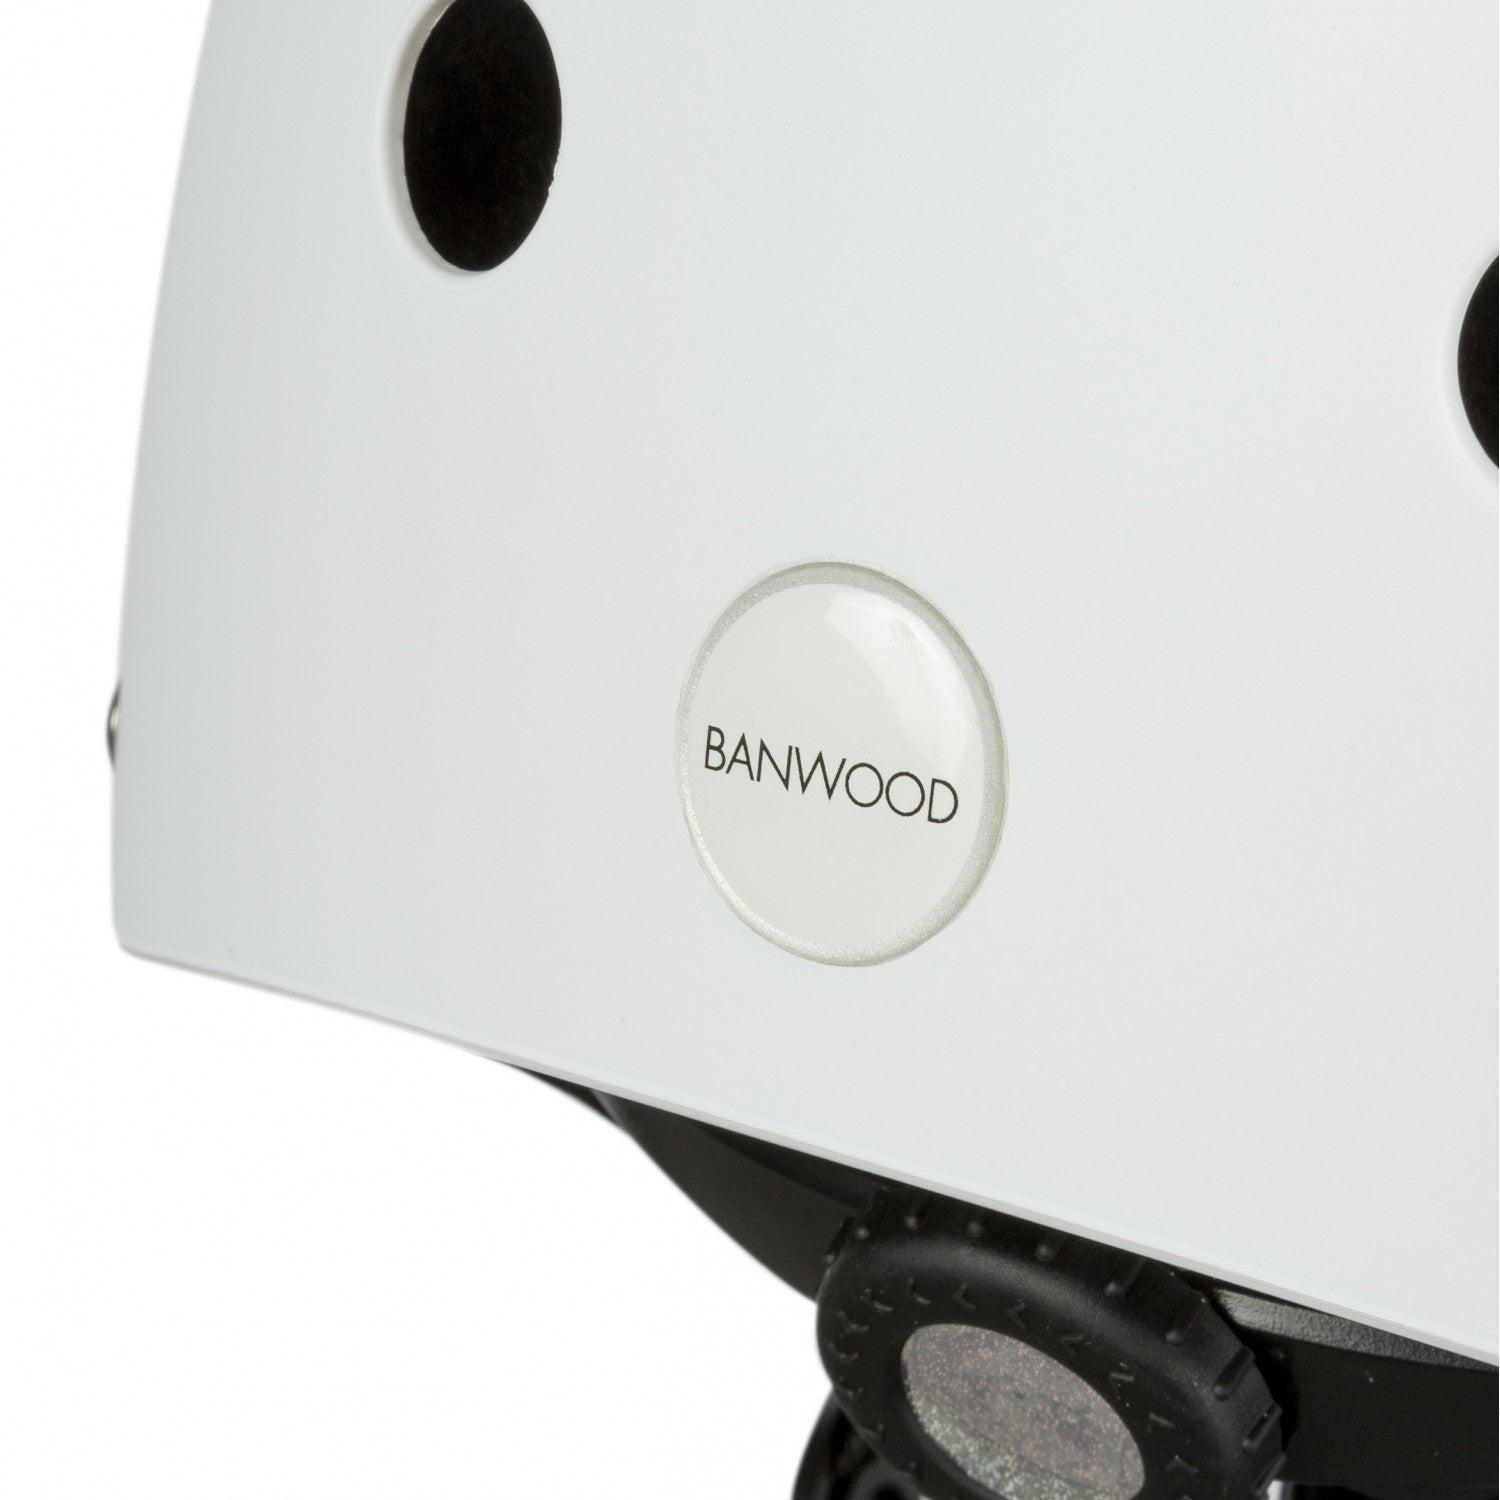 Banwood Classic Helmet (3-7 years) White (Pre-order)